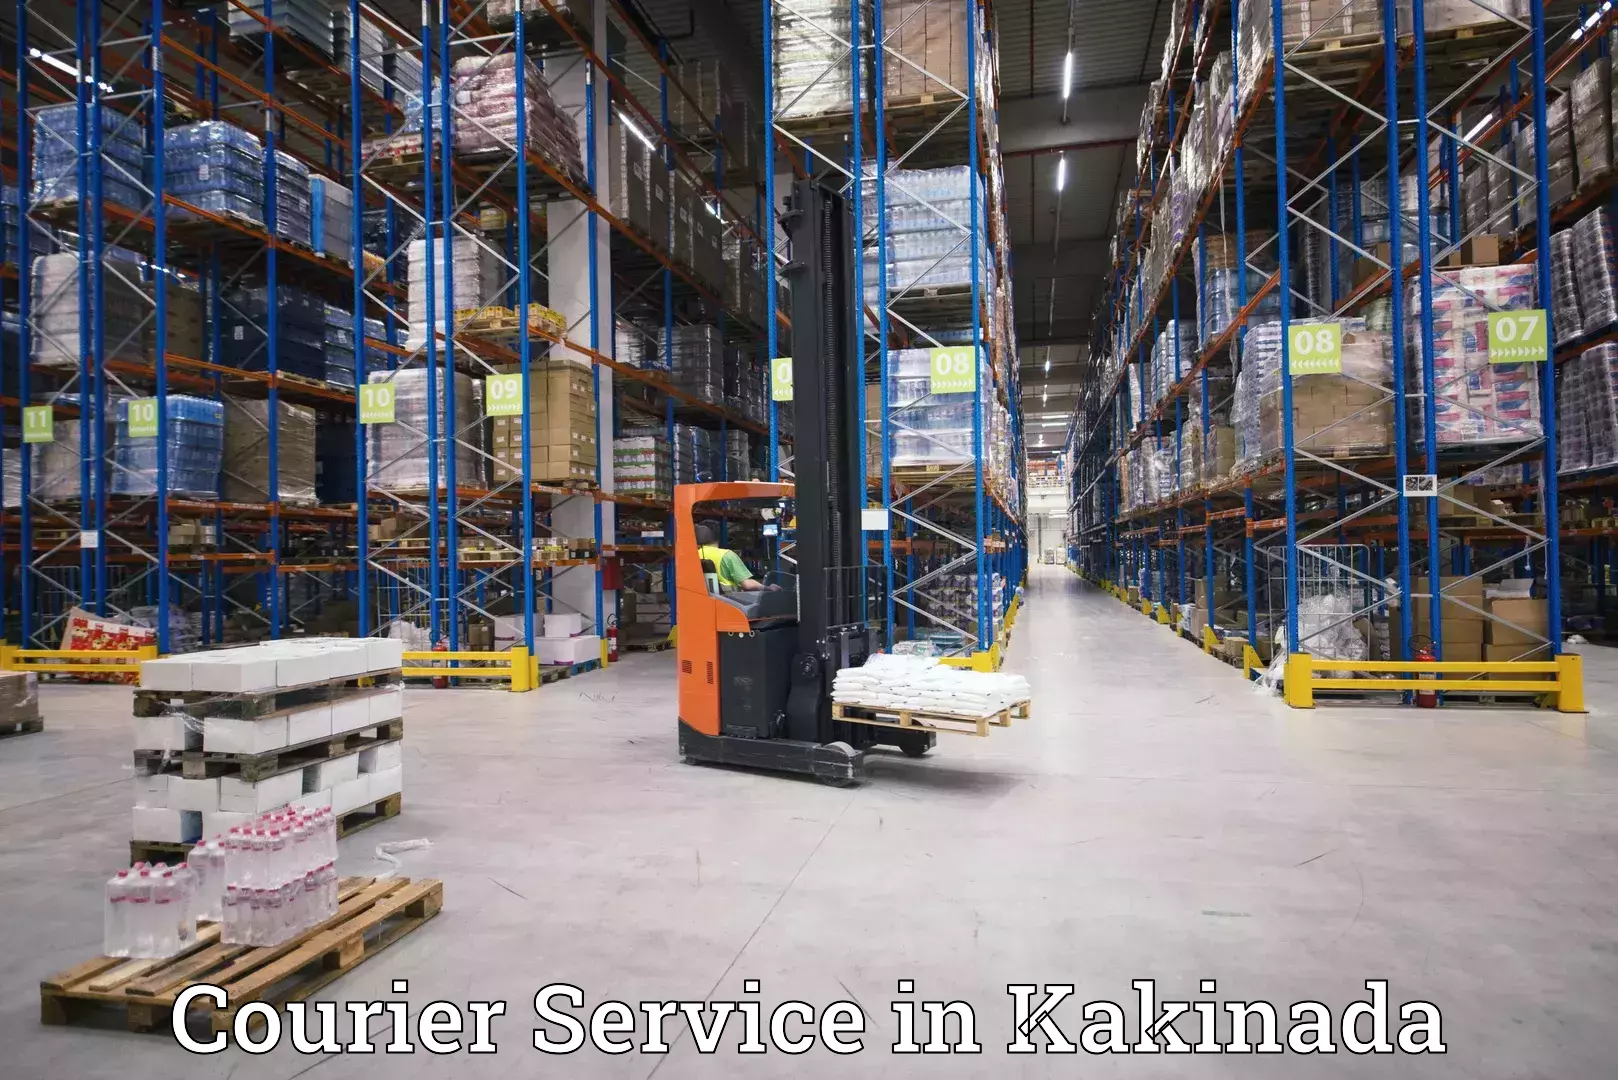 Next-generation courier services in Kakinada